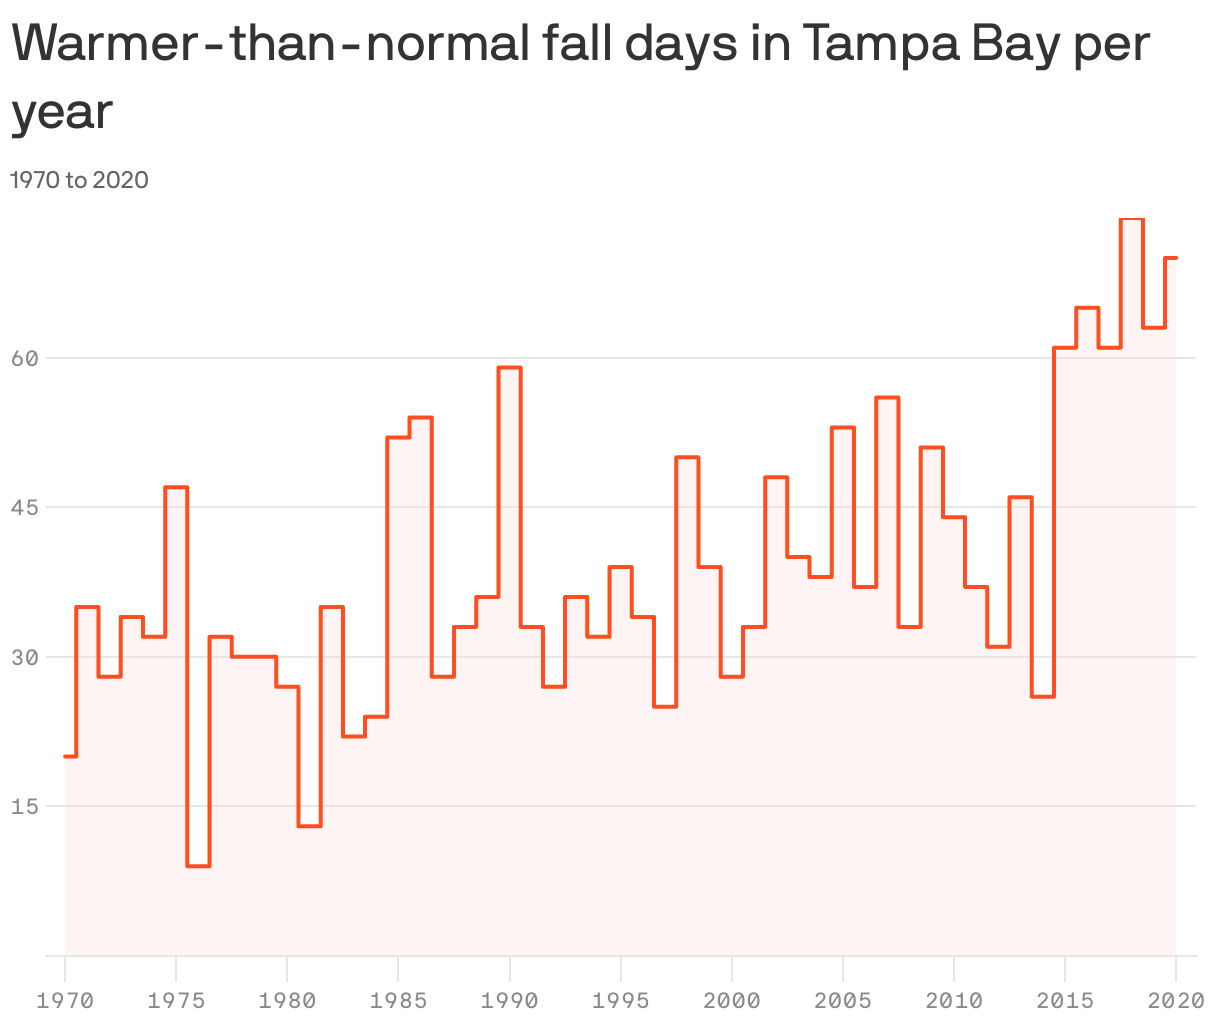 Warmer-than-normal fall days in Tampa Bay per year